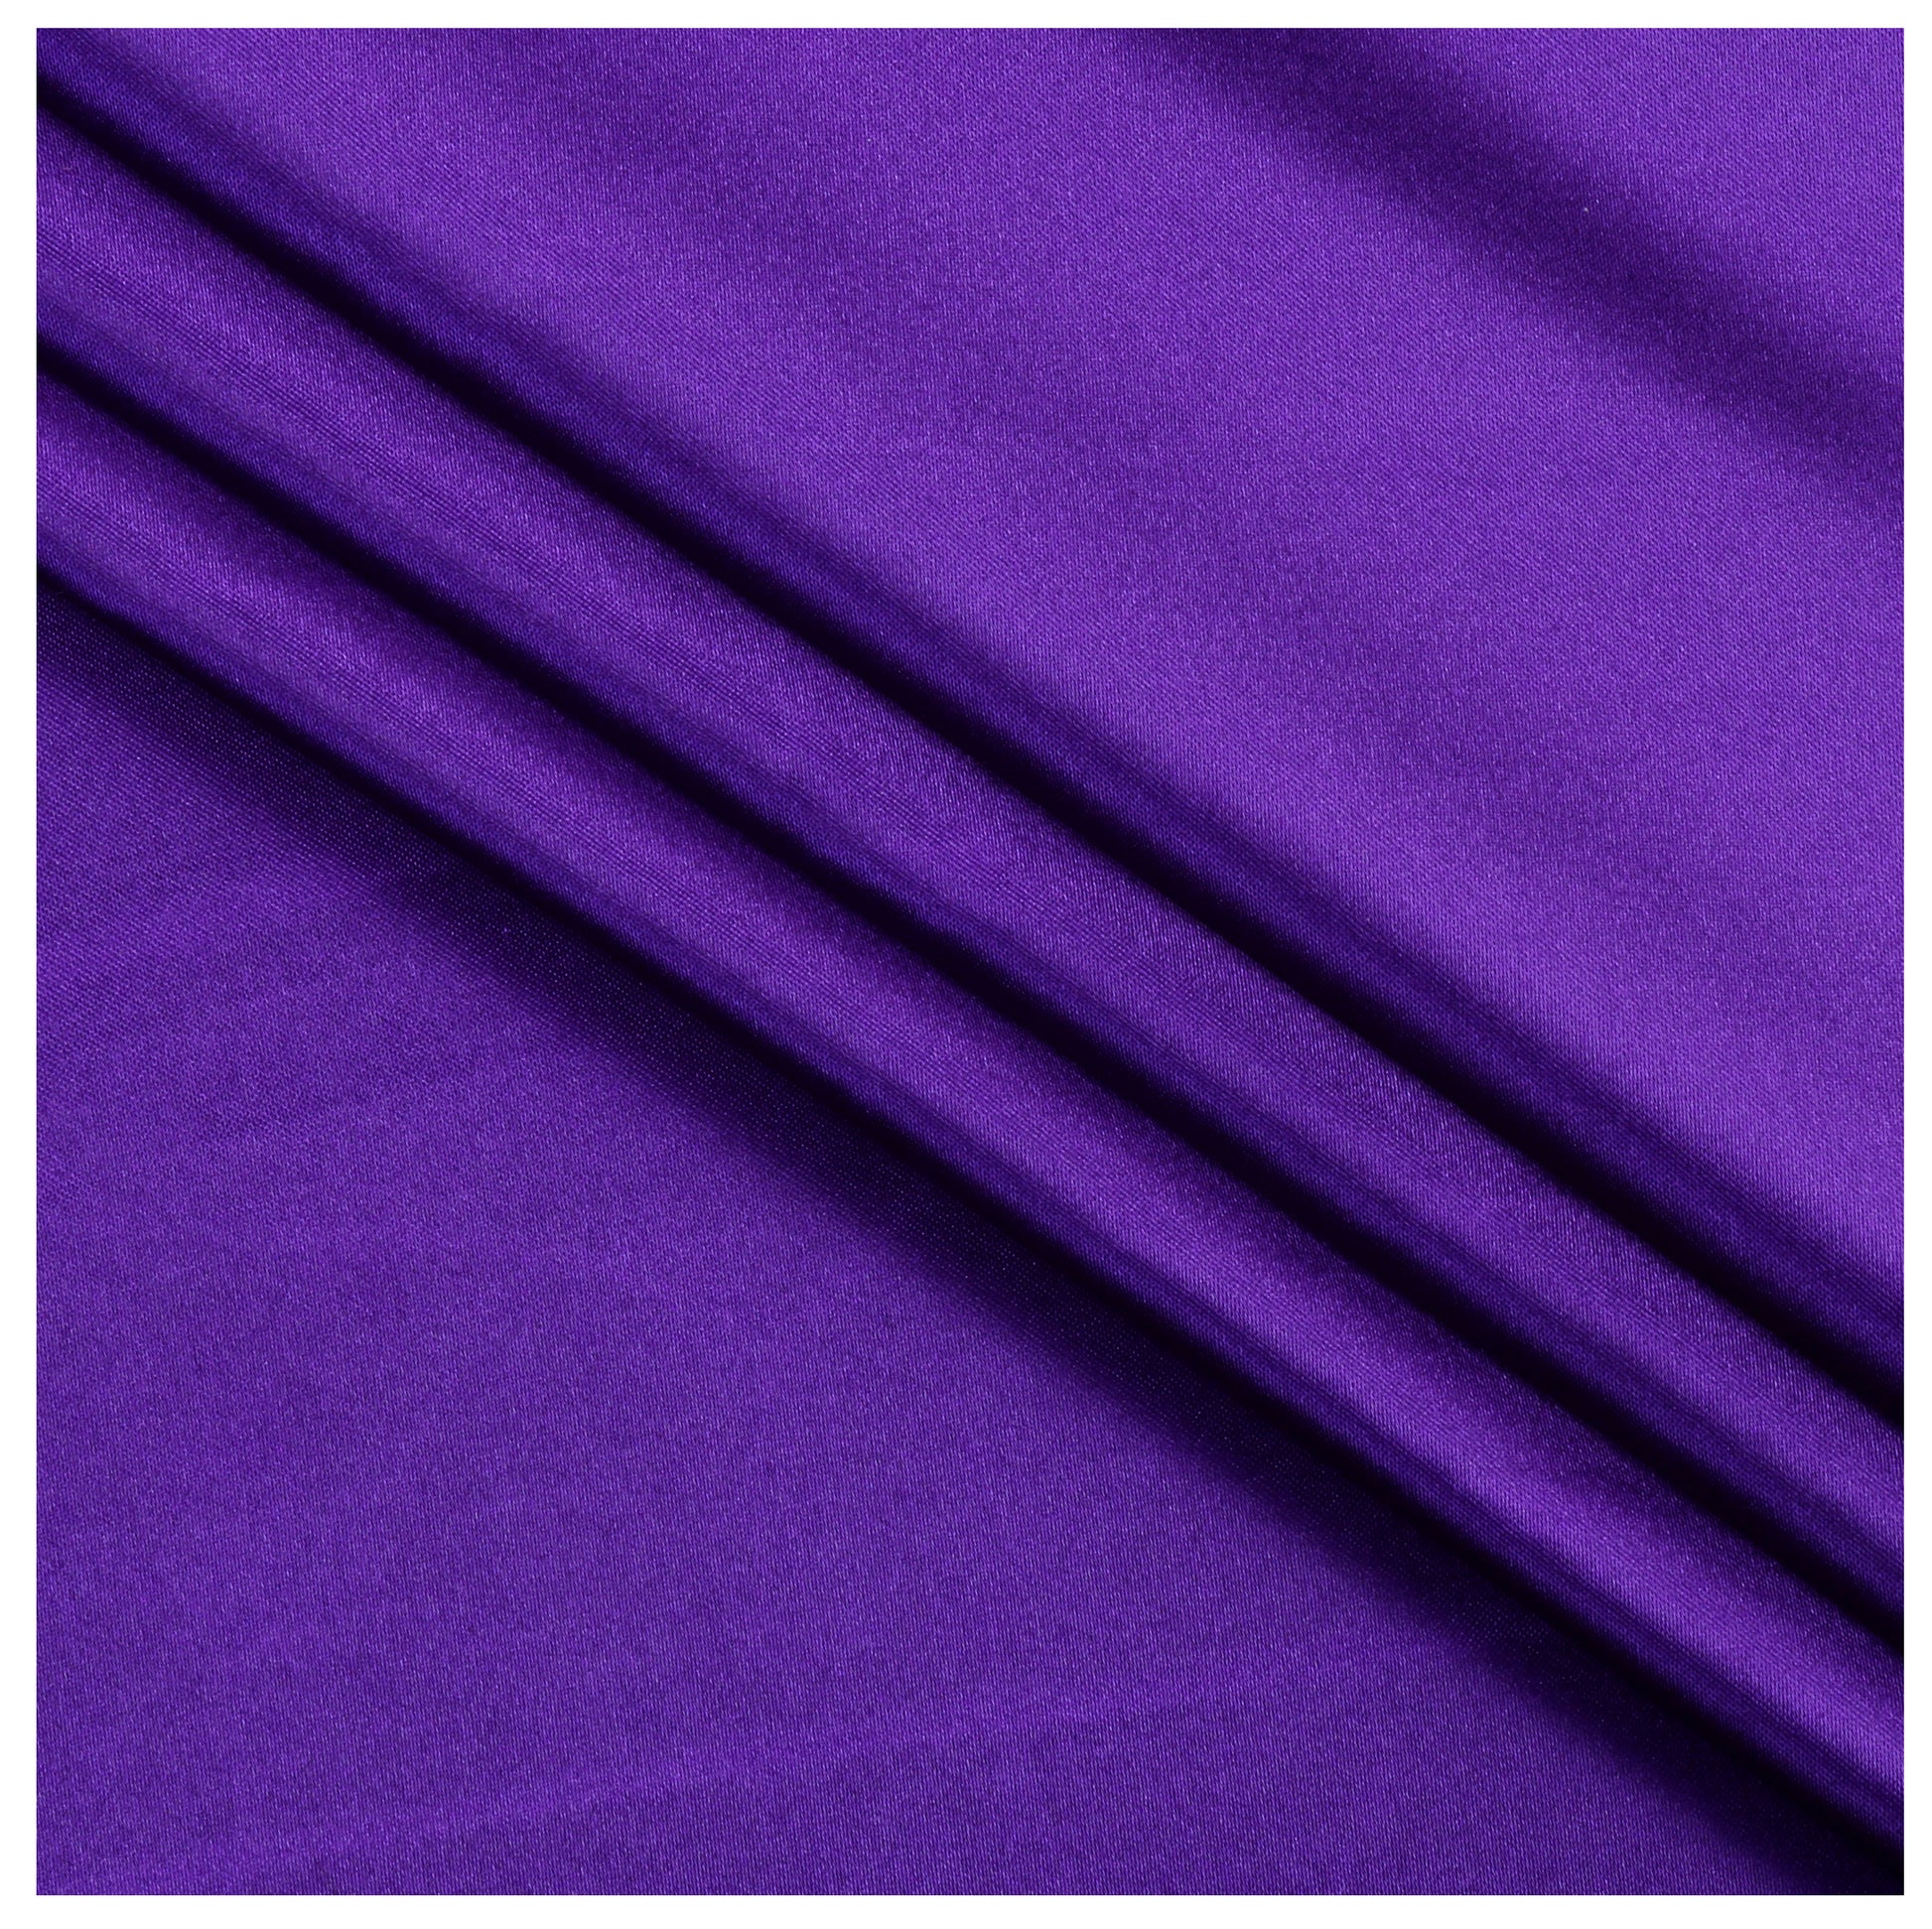 Cadbury Purple,d7ad2176-d7ee-4da0-b168-eddcbf45b2a6